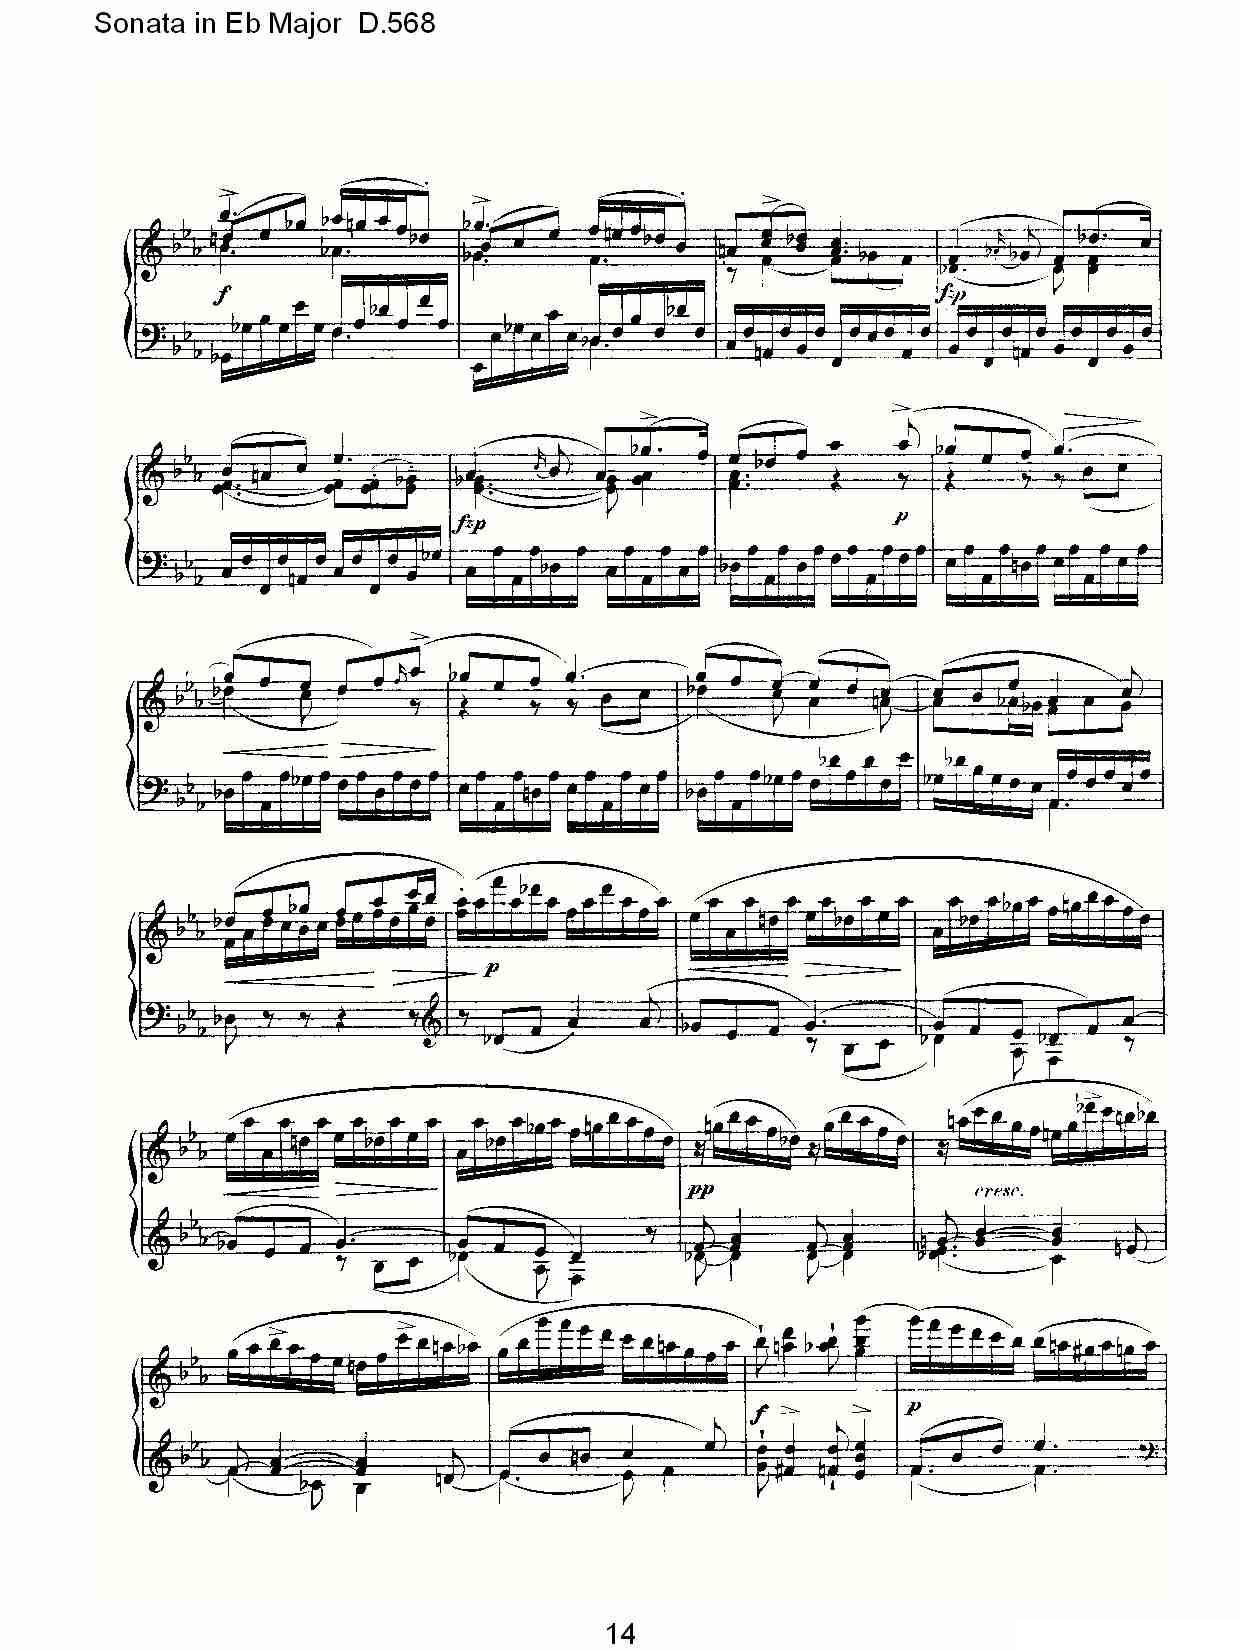 Sonata in Eb Major D.568（Eb大调奏鸣曲 D.568）钢琴曲谱（图14）